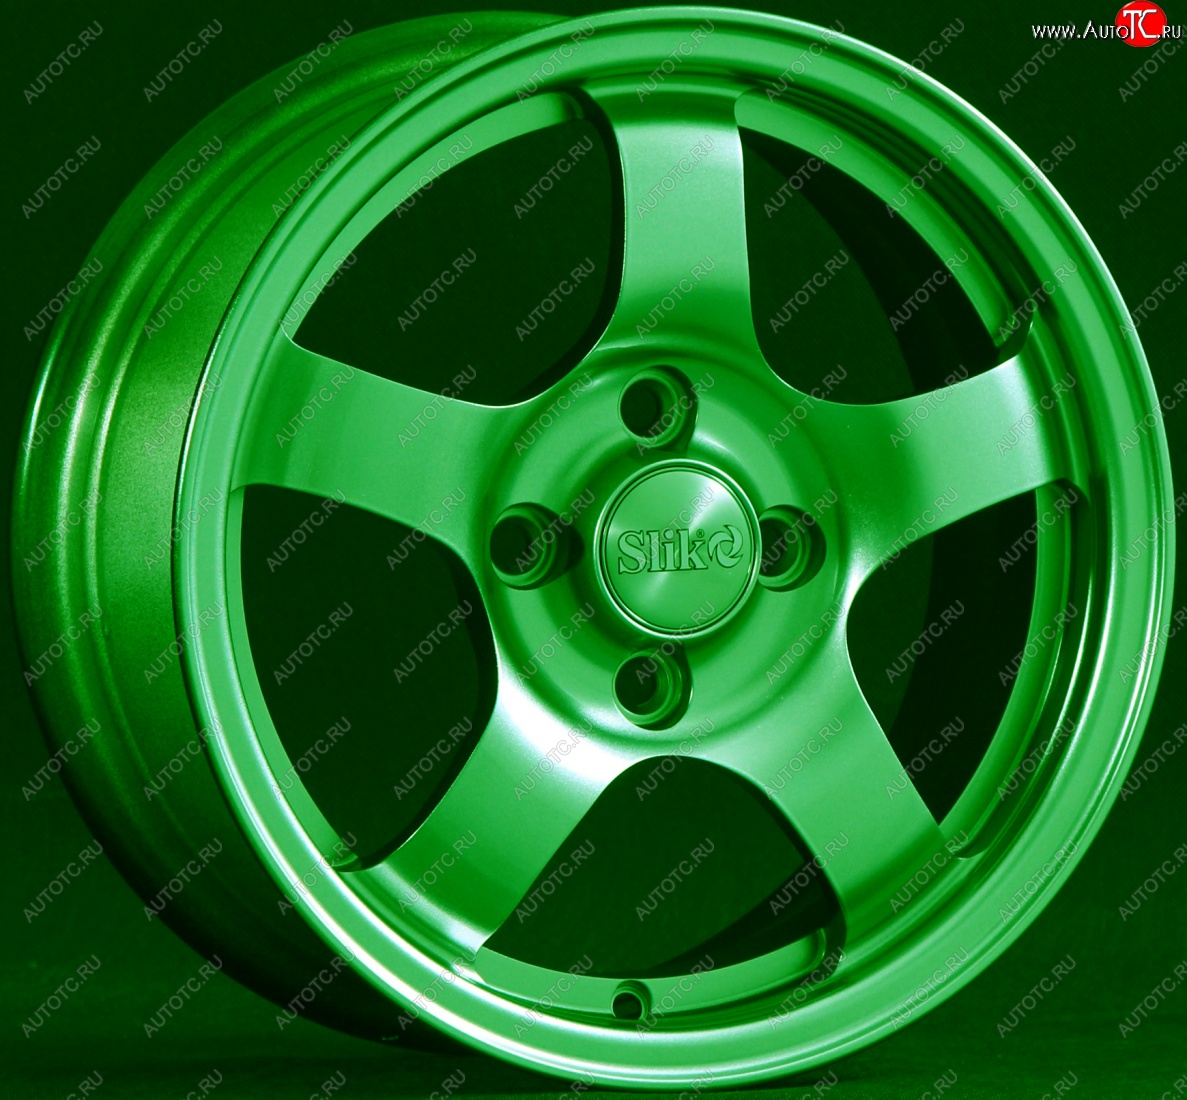 12 799 р. Кованый диск Slik Classik 6x14 (Зелёный GREEN) Лада Ока 1111 (1988-2008) 3x98.0xDIA60.0xET40.0 (Цвет: Зелёный GREEN)